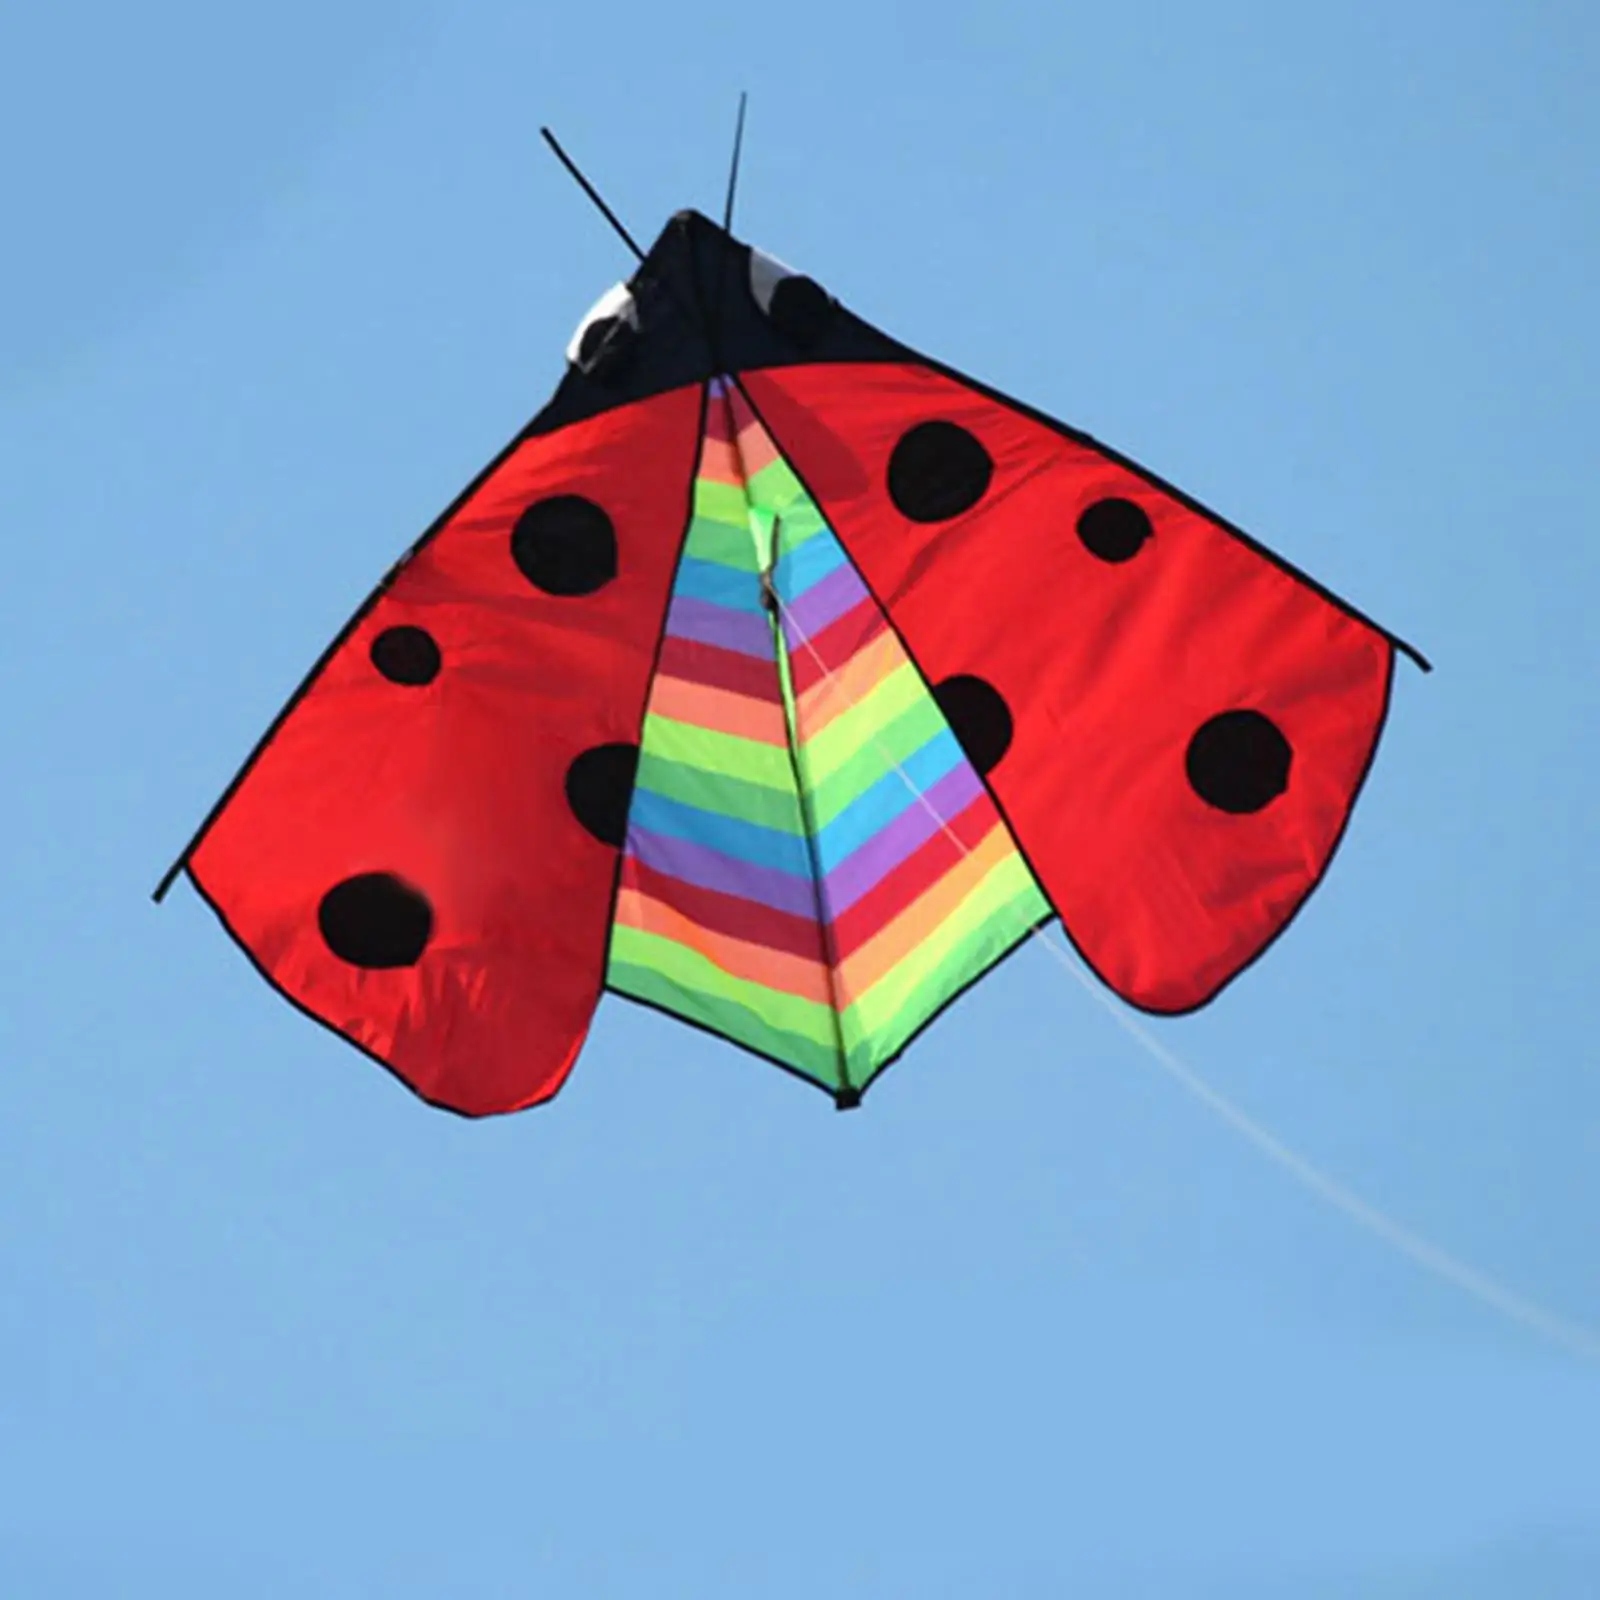 Large Delta Kite Fly Kite Single Line Easy Flyer Novelty Triangle Ladybug Kite for Park Outdoor Garden Beach Family Trips